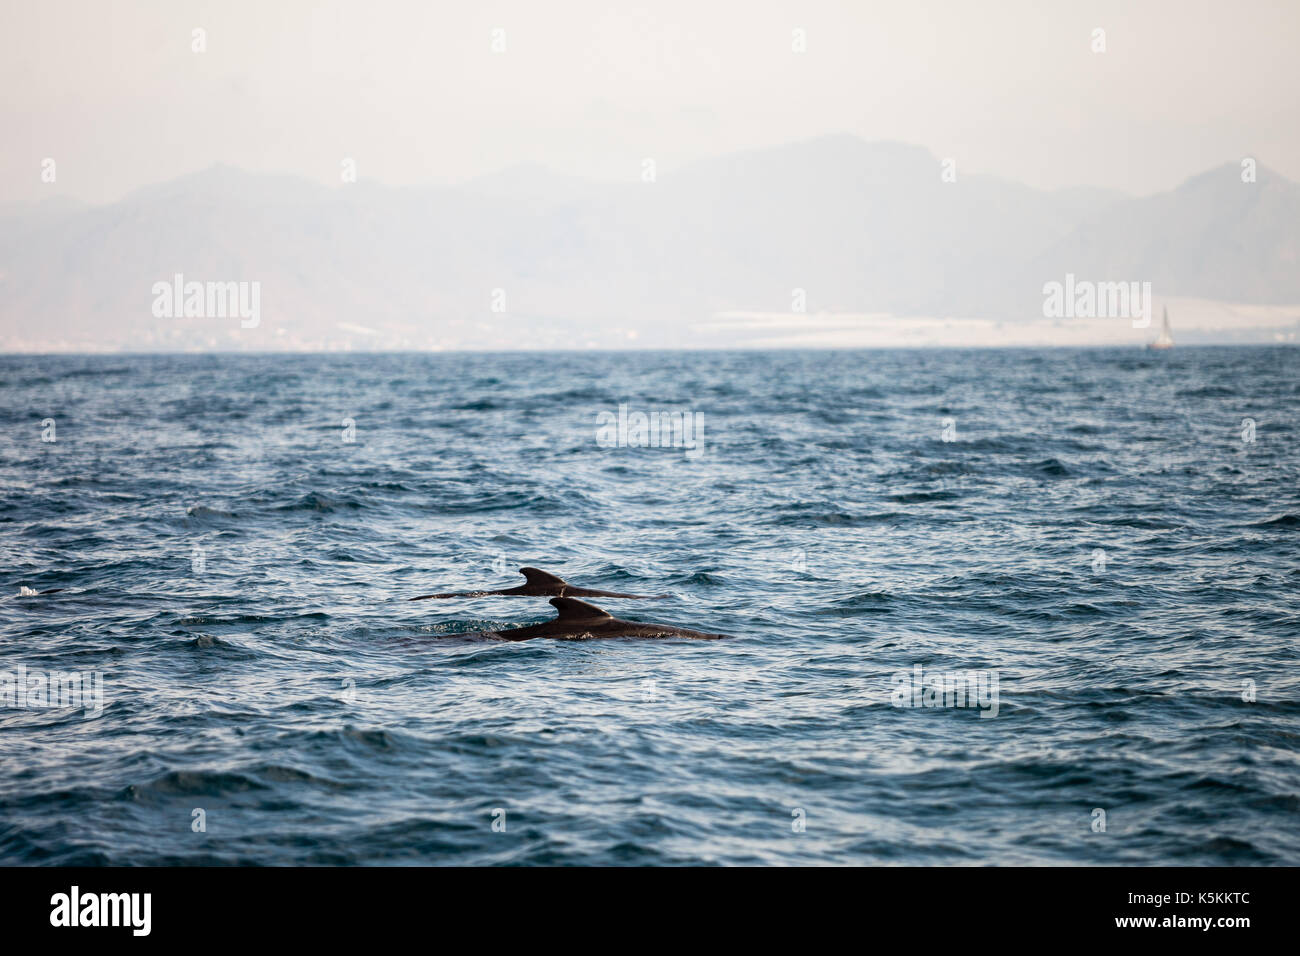 Dolphins and calderon in mediterranean sea Stock Photo